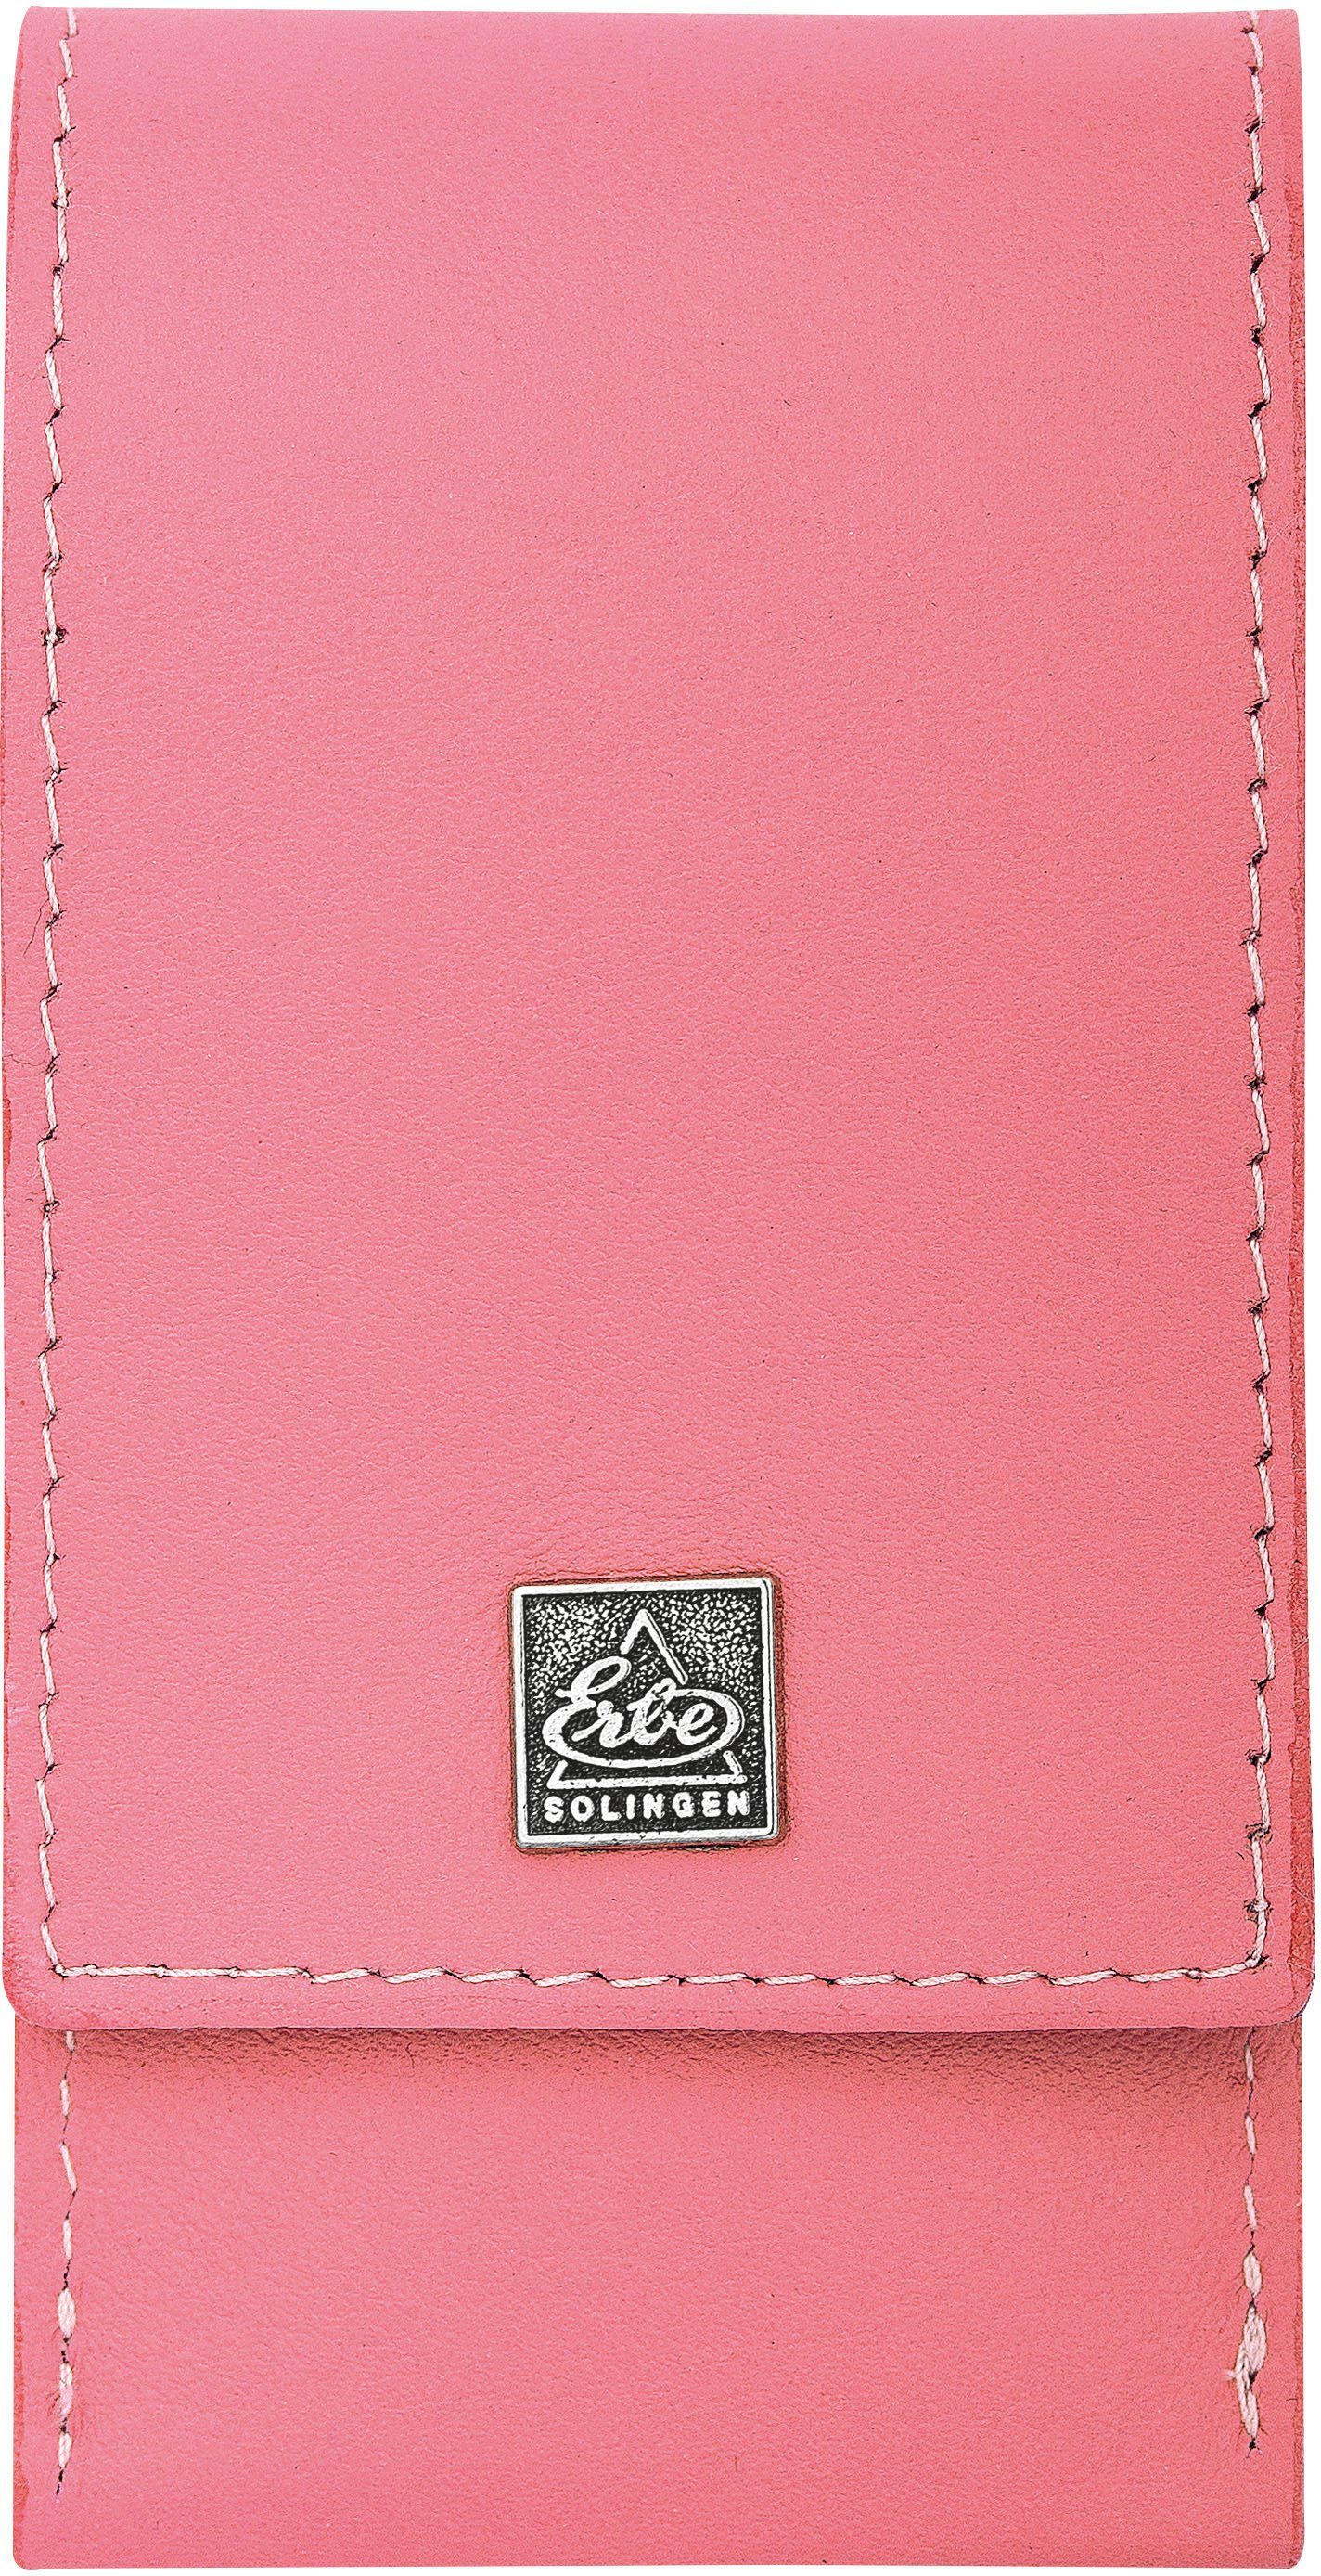 ERBE Maniküre-Etui ERBE Maniküre Set "Colour", Serie 3 pink, 3-tlg., tlg. Taschen-Etui